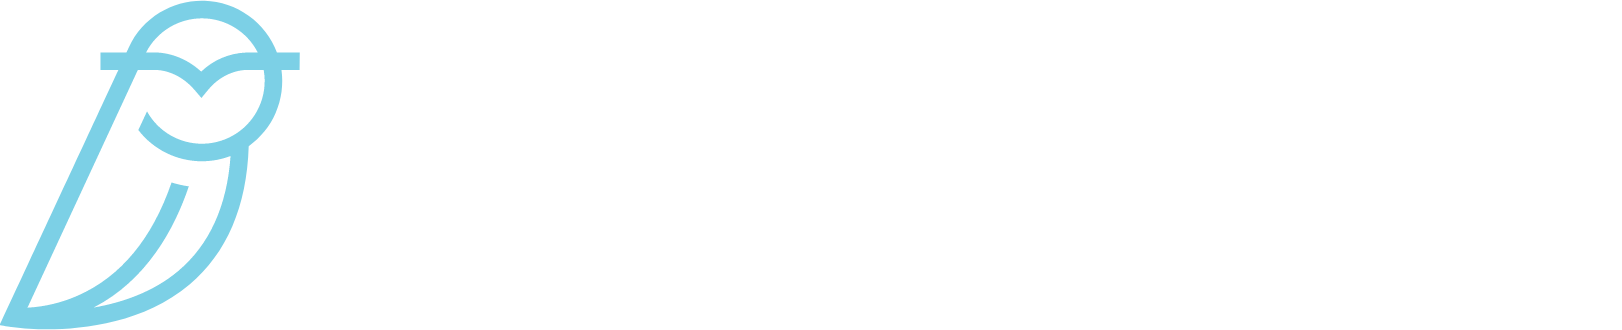 Blue Owl Capital Logo groß für dunkle Hintergründe (transparentes PNG)